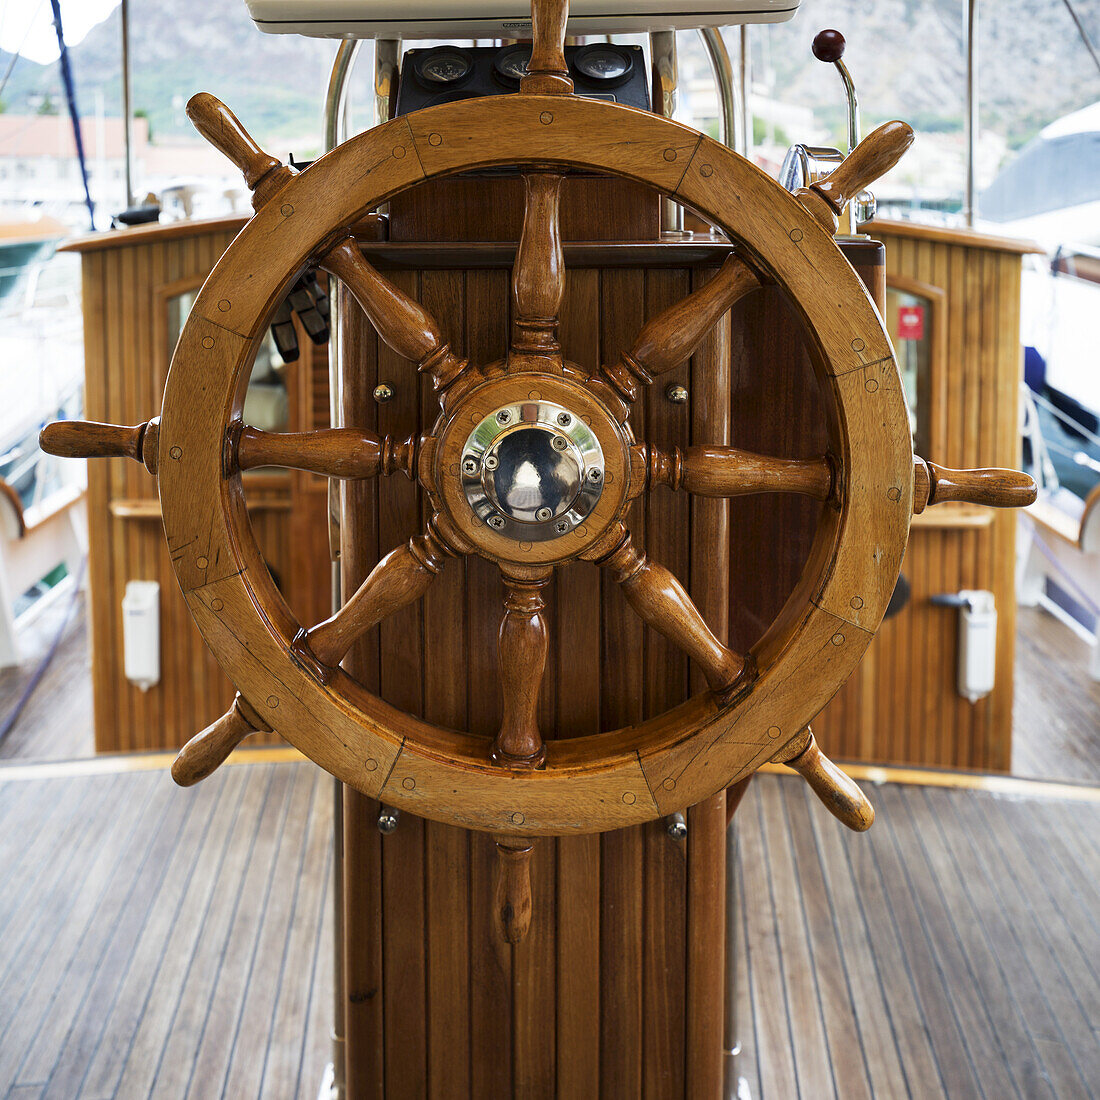 Wooden steering wheel on a boat; Kotor, Montenegro